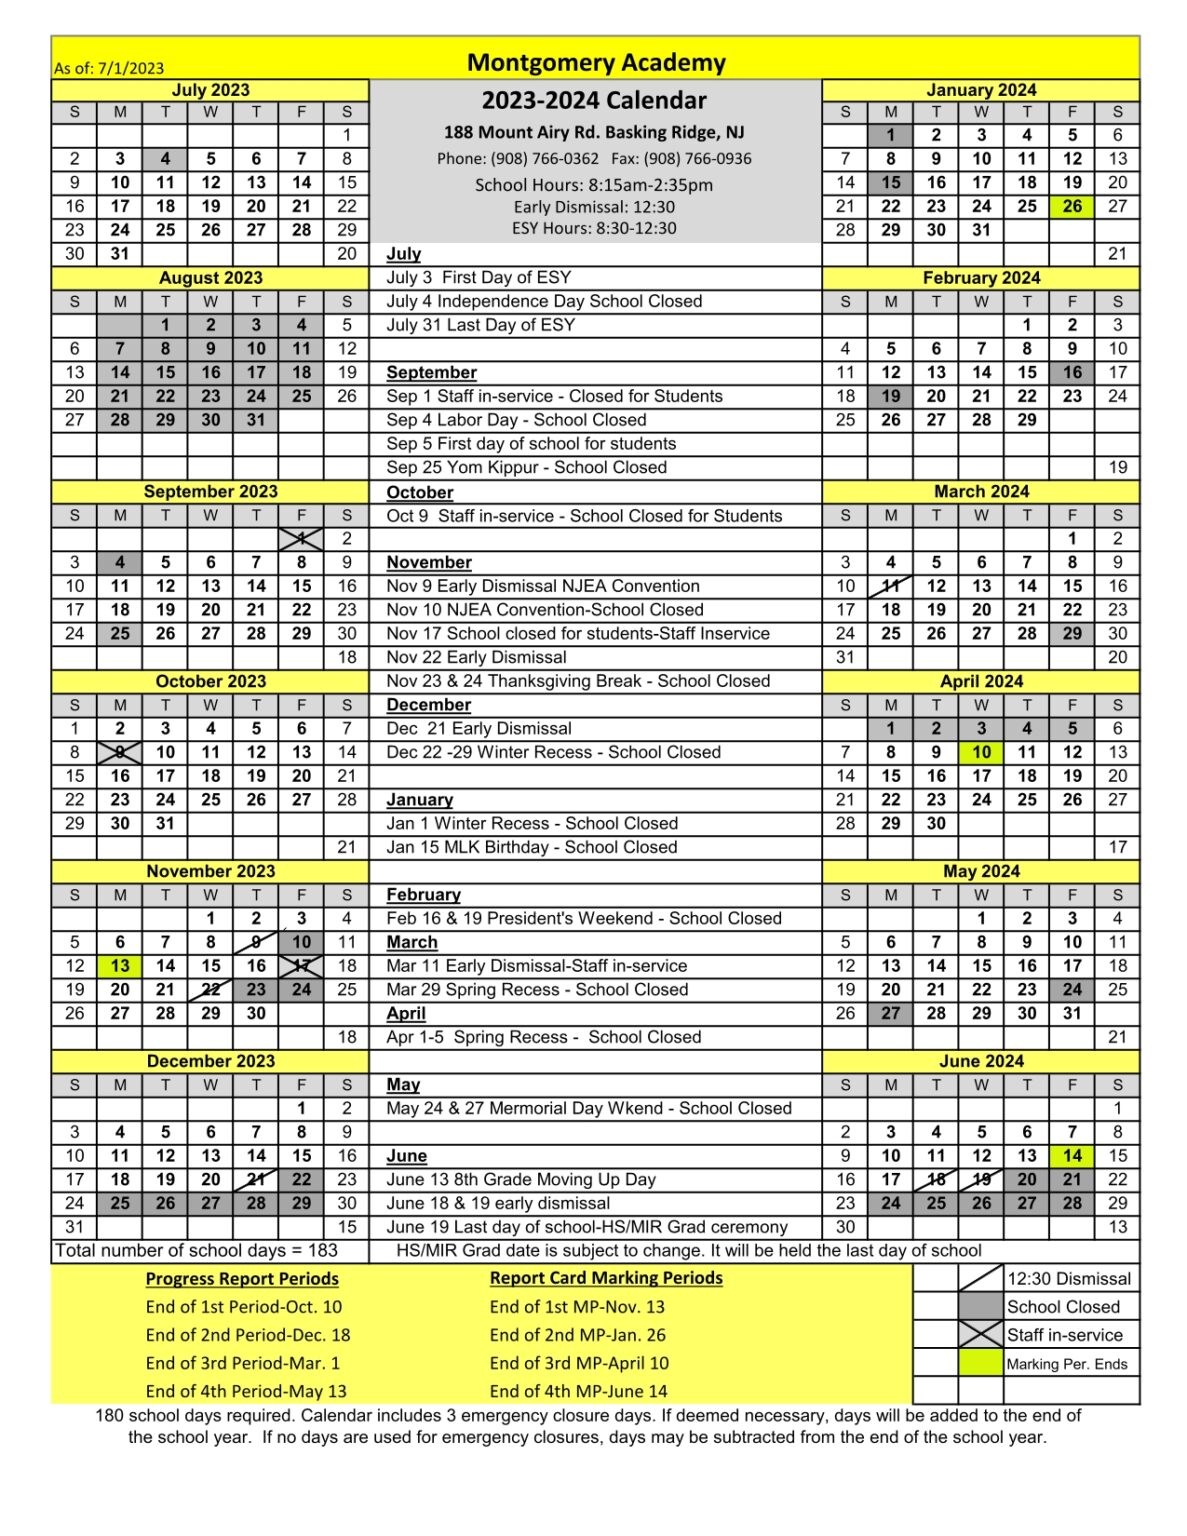 School Calendar Montgomery Academy